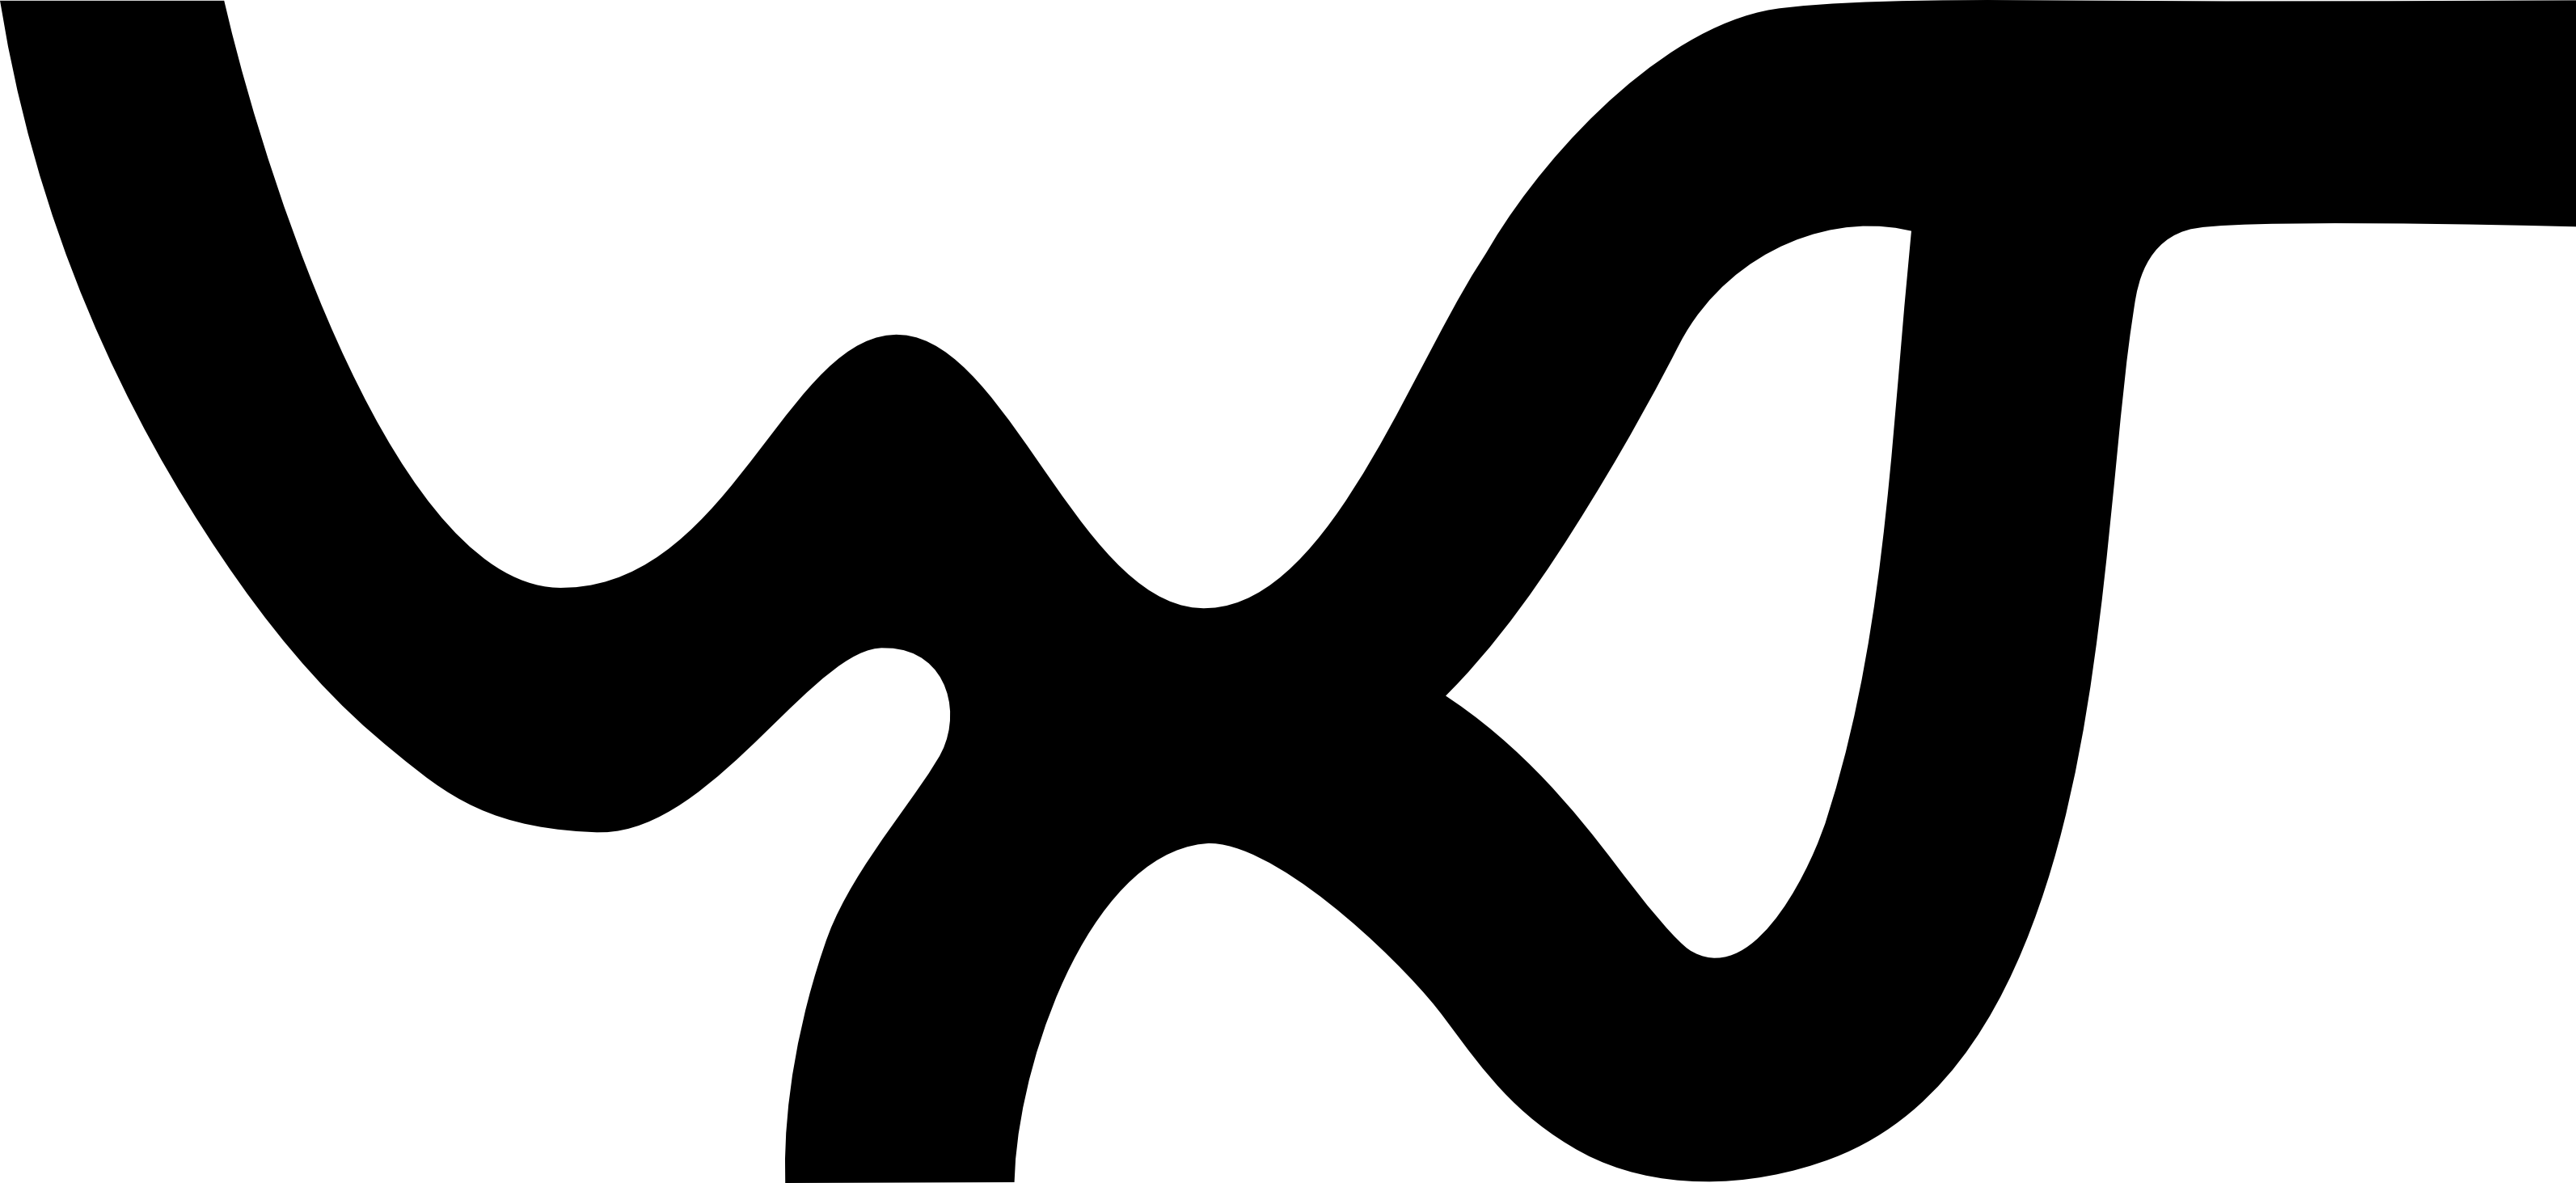 UPC логотип. Картелл лого. Логотип Schwarz Toolkit. Code logo PNG. Page sign